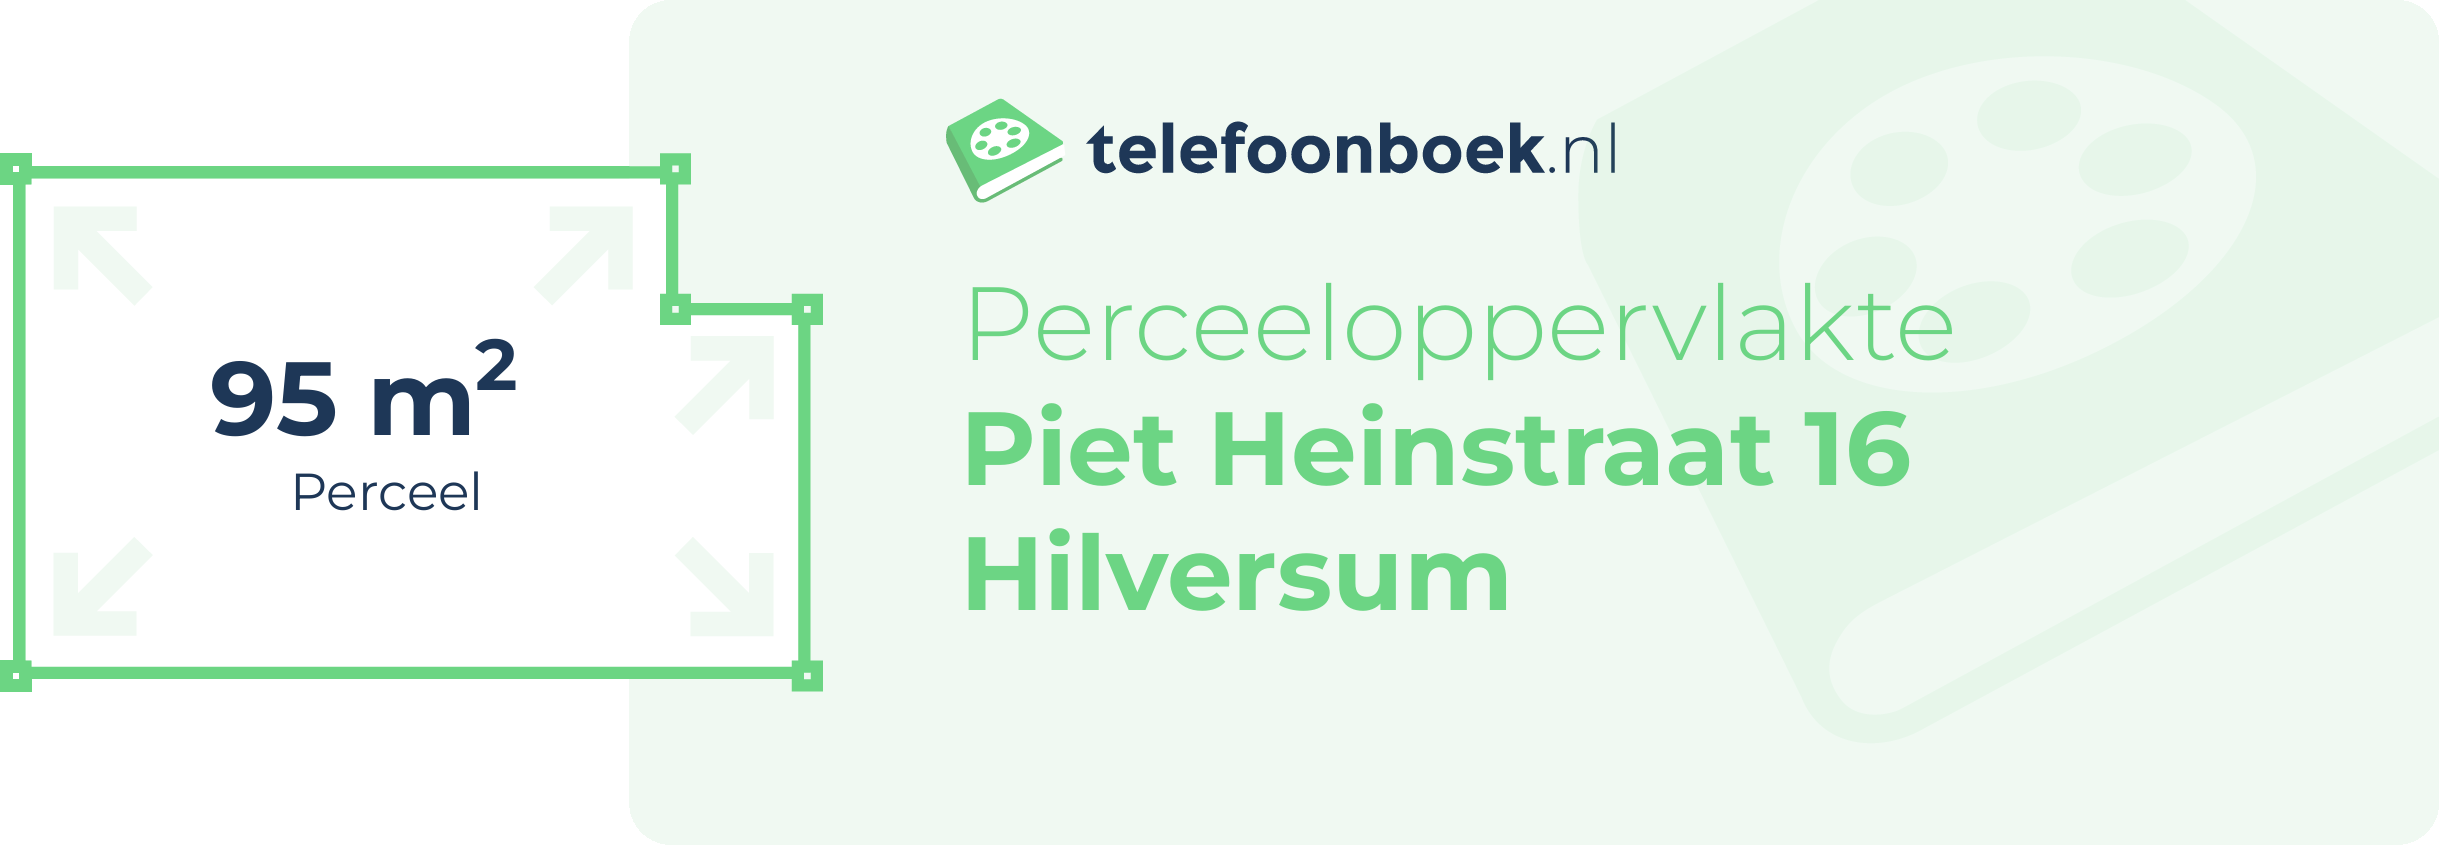 Perceeloppervlakte Piet Heinstraat 16 Hilversum